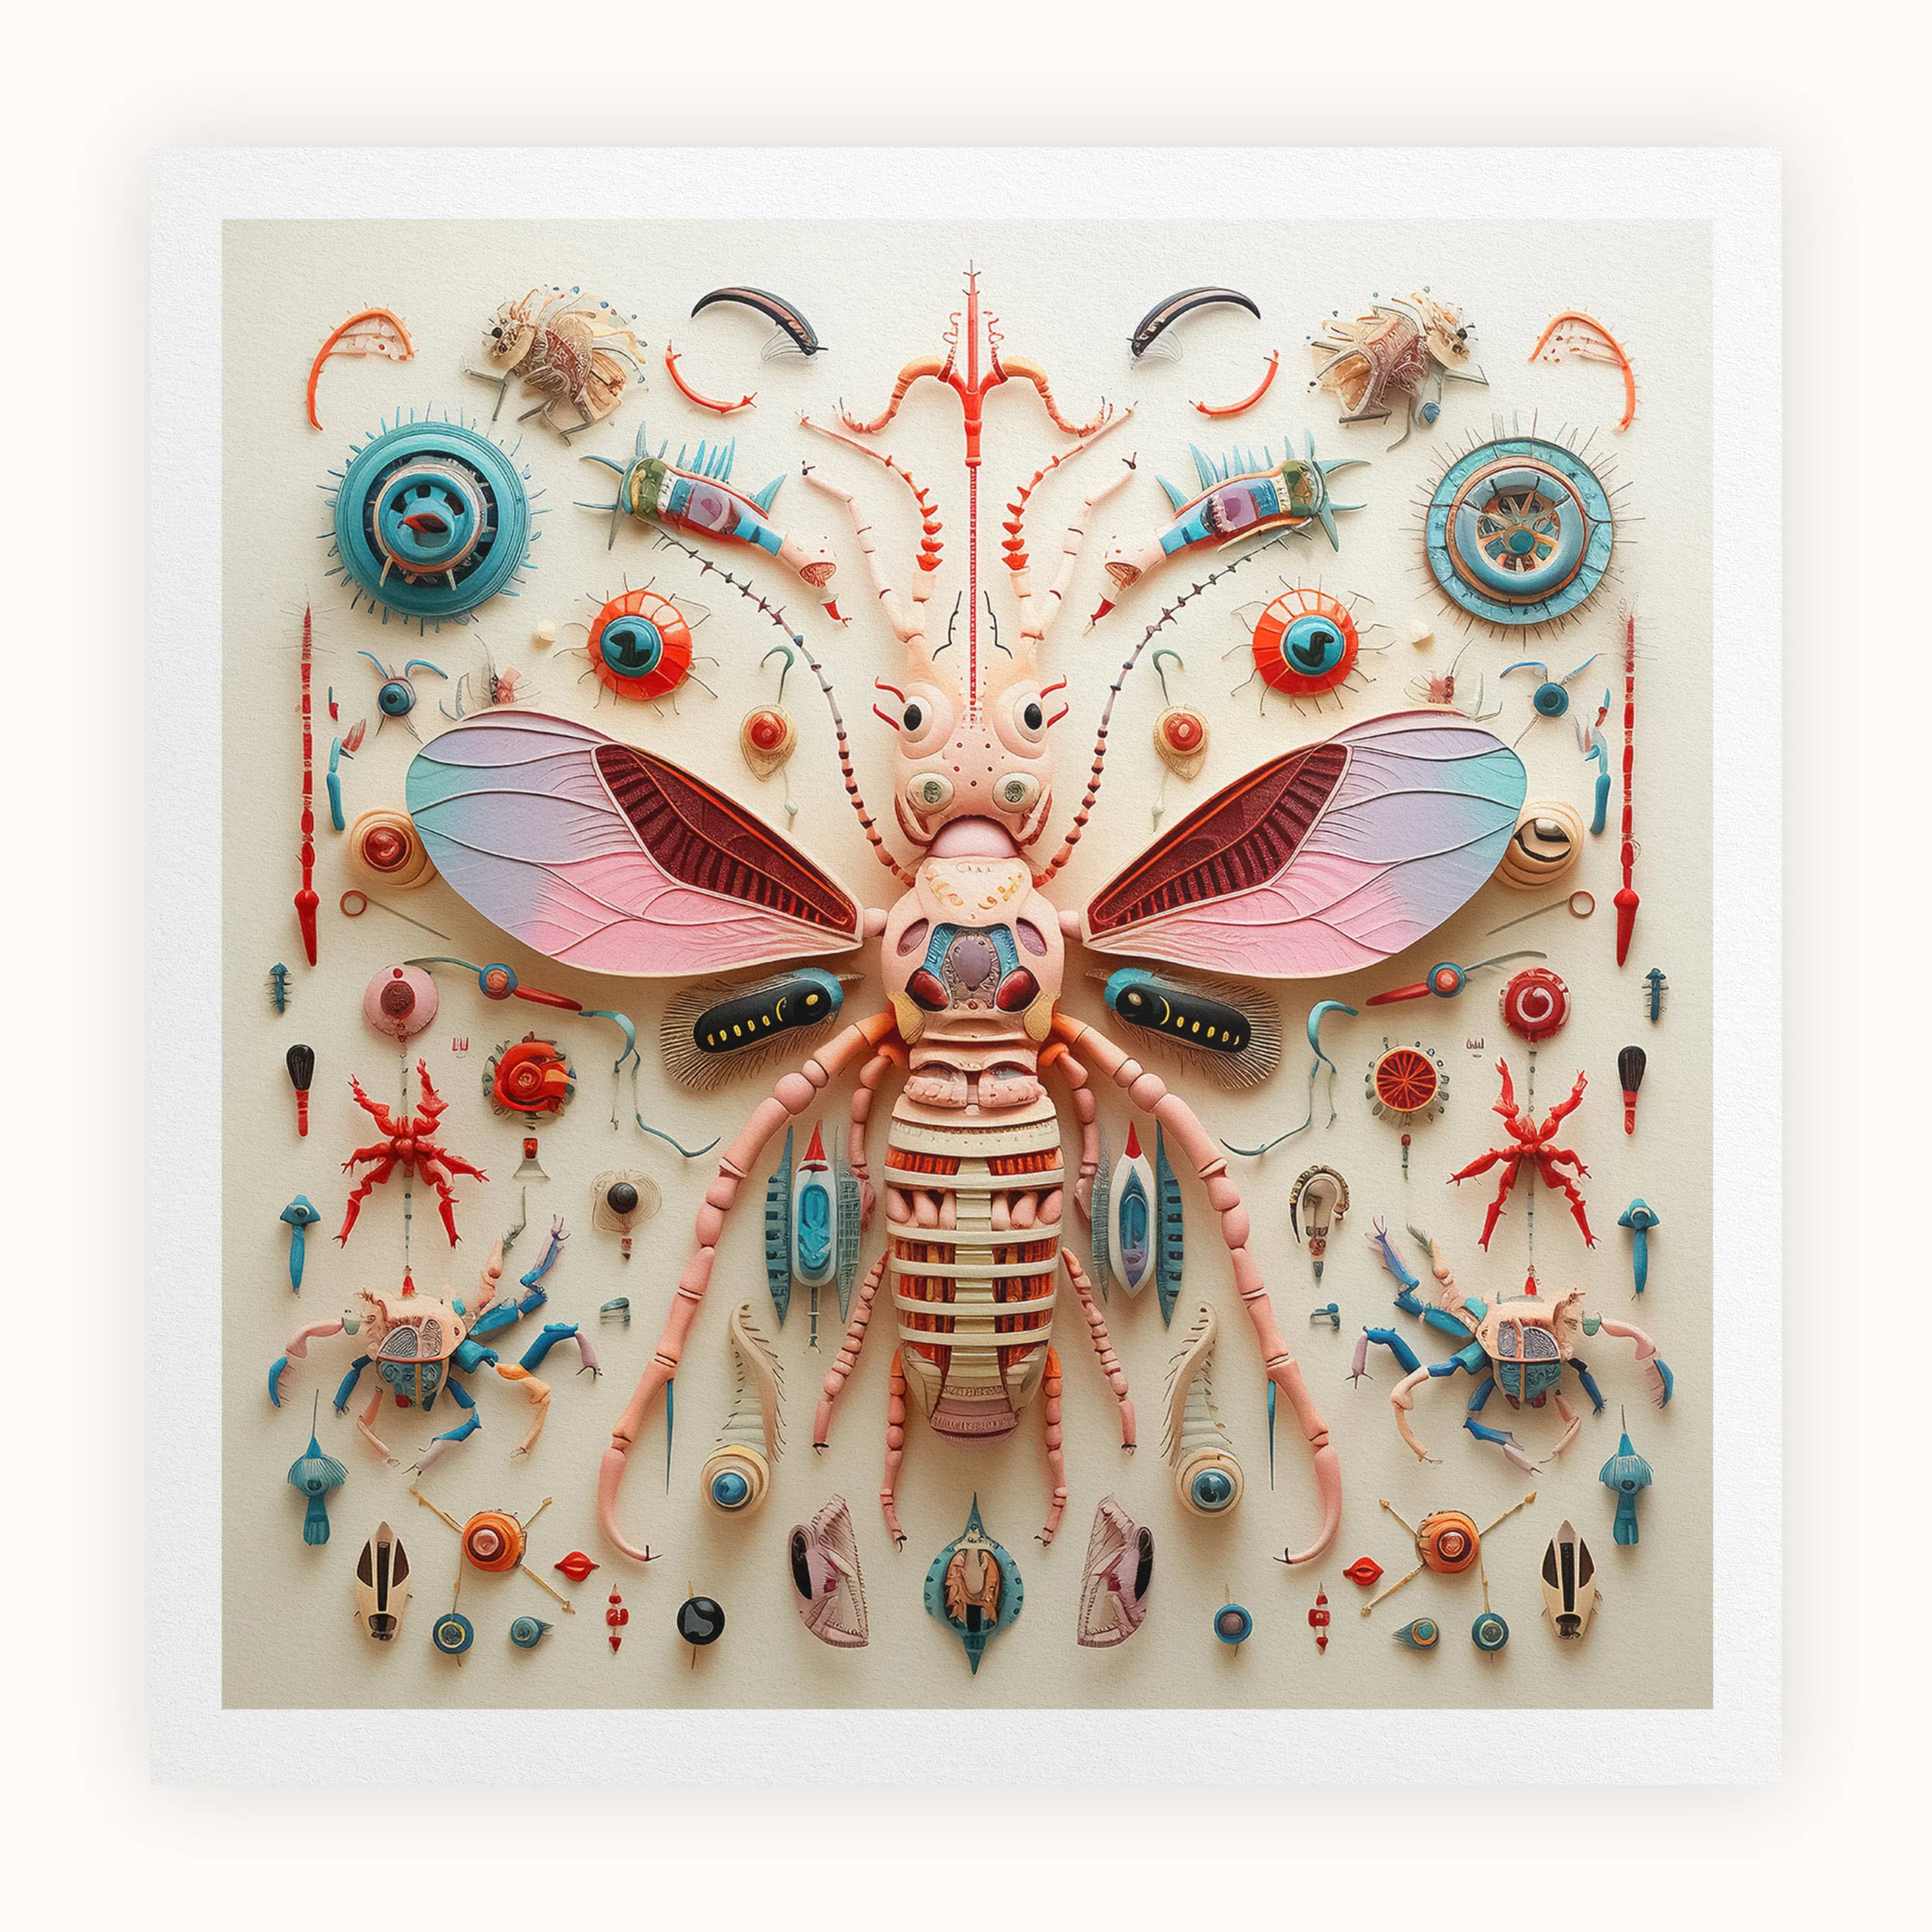 Peachy Queen - Alien Species Taxonomy Art Print - Posters Prints & Visual Artwork - Aesthetic Art